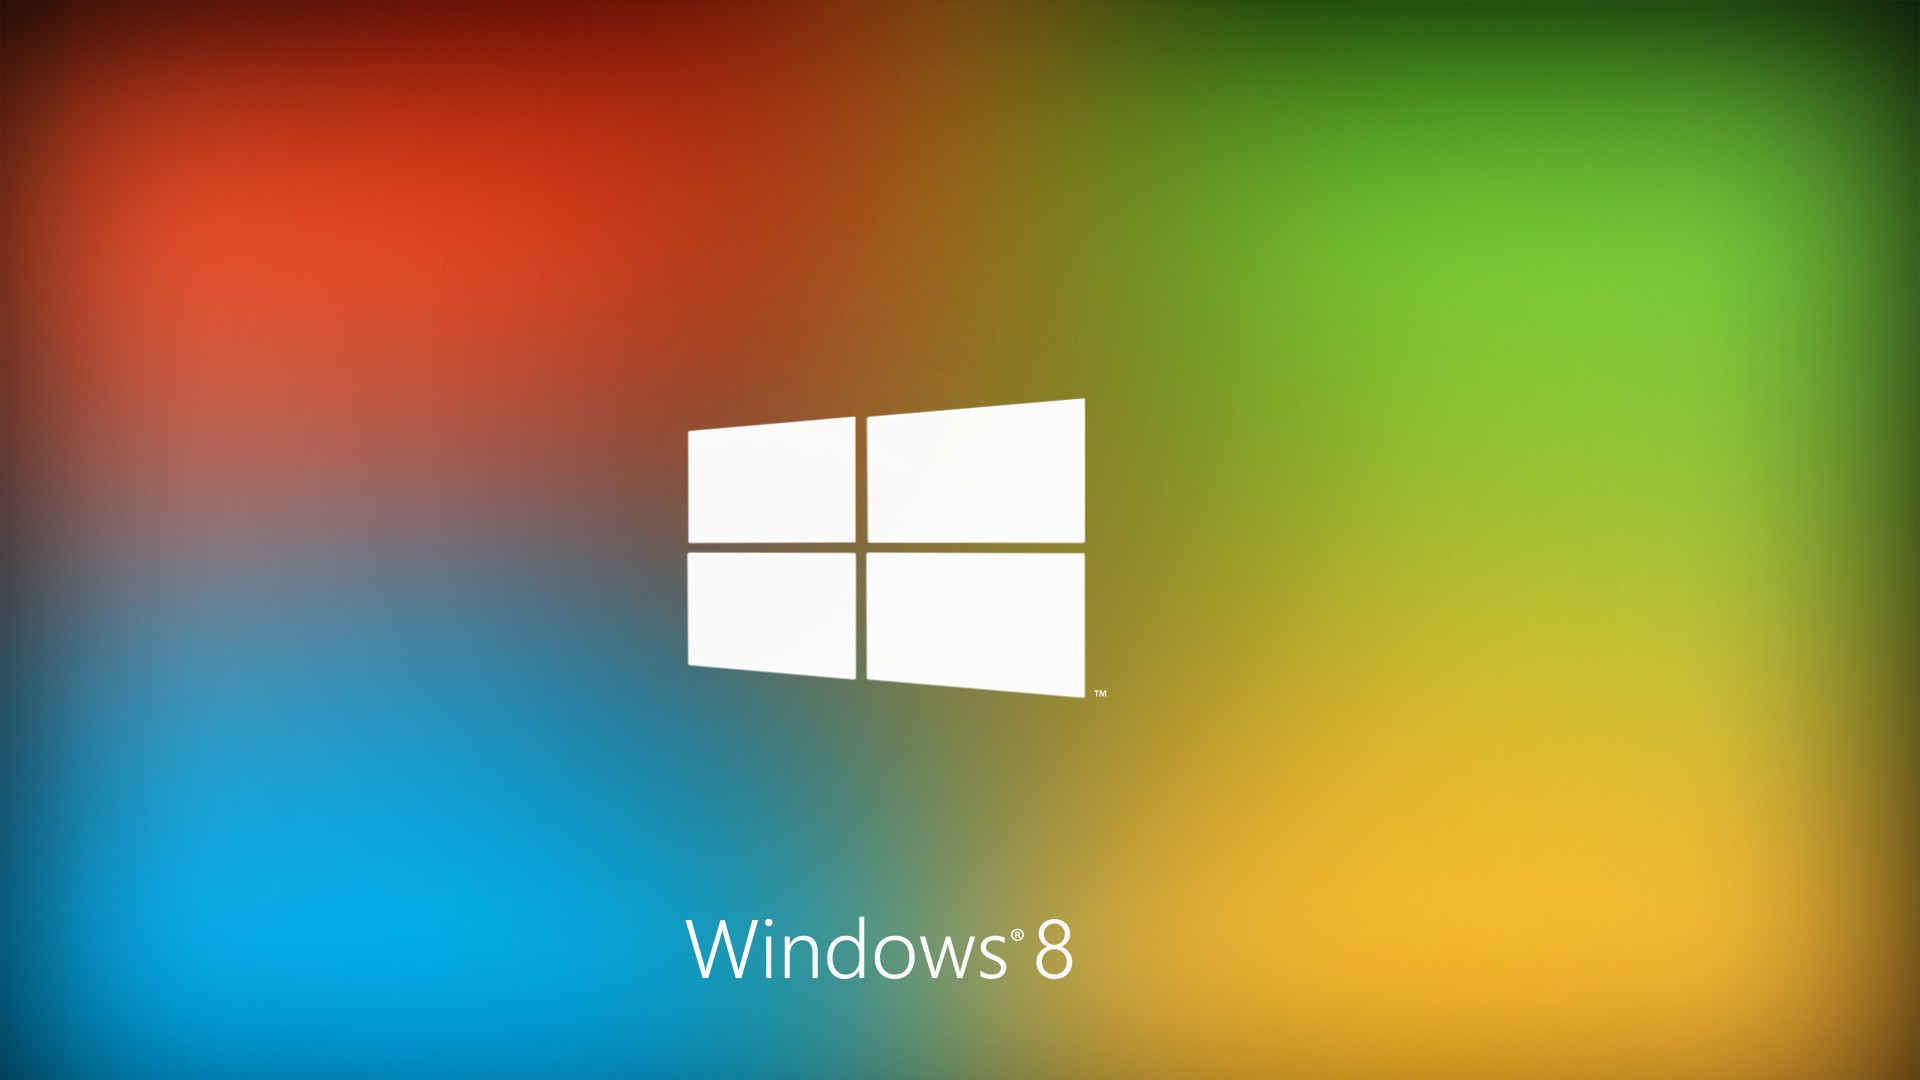 Best Windows 8 Logo 2013 HD Wallpaper Best Windows 8 Logo 2013 1920x1080